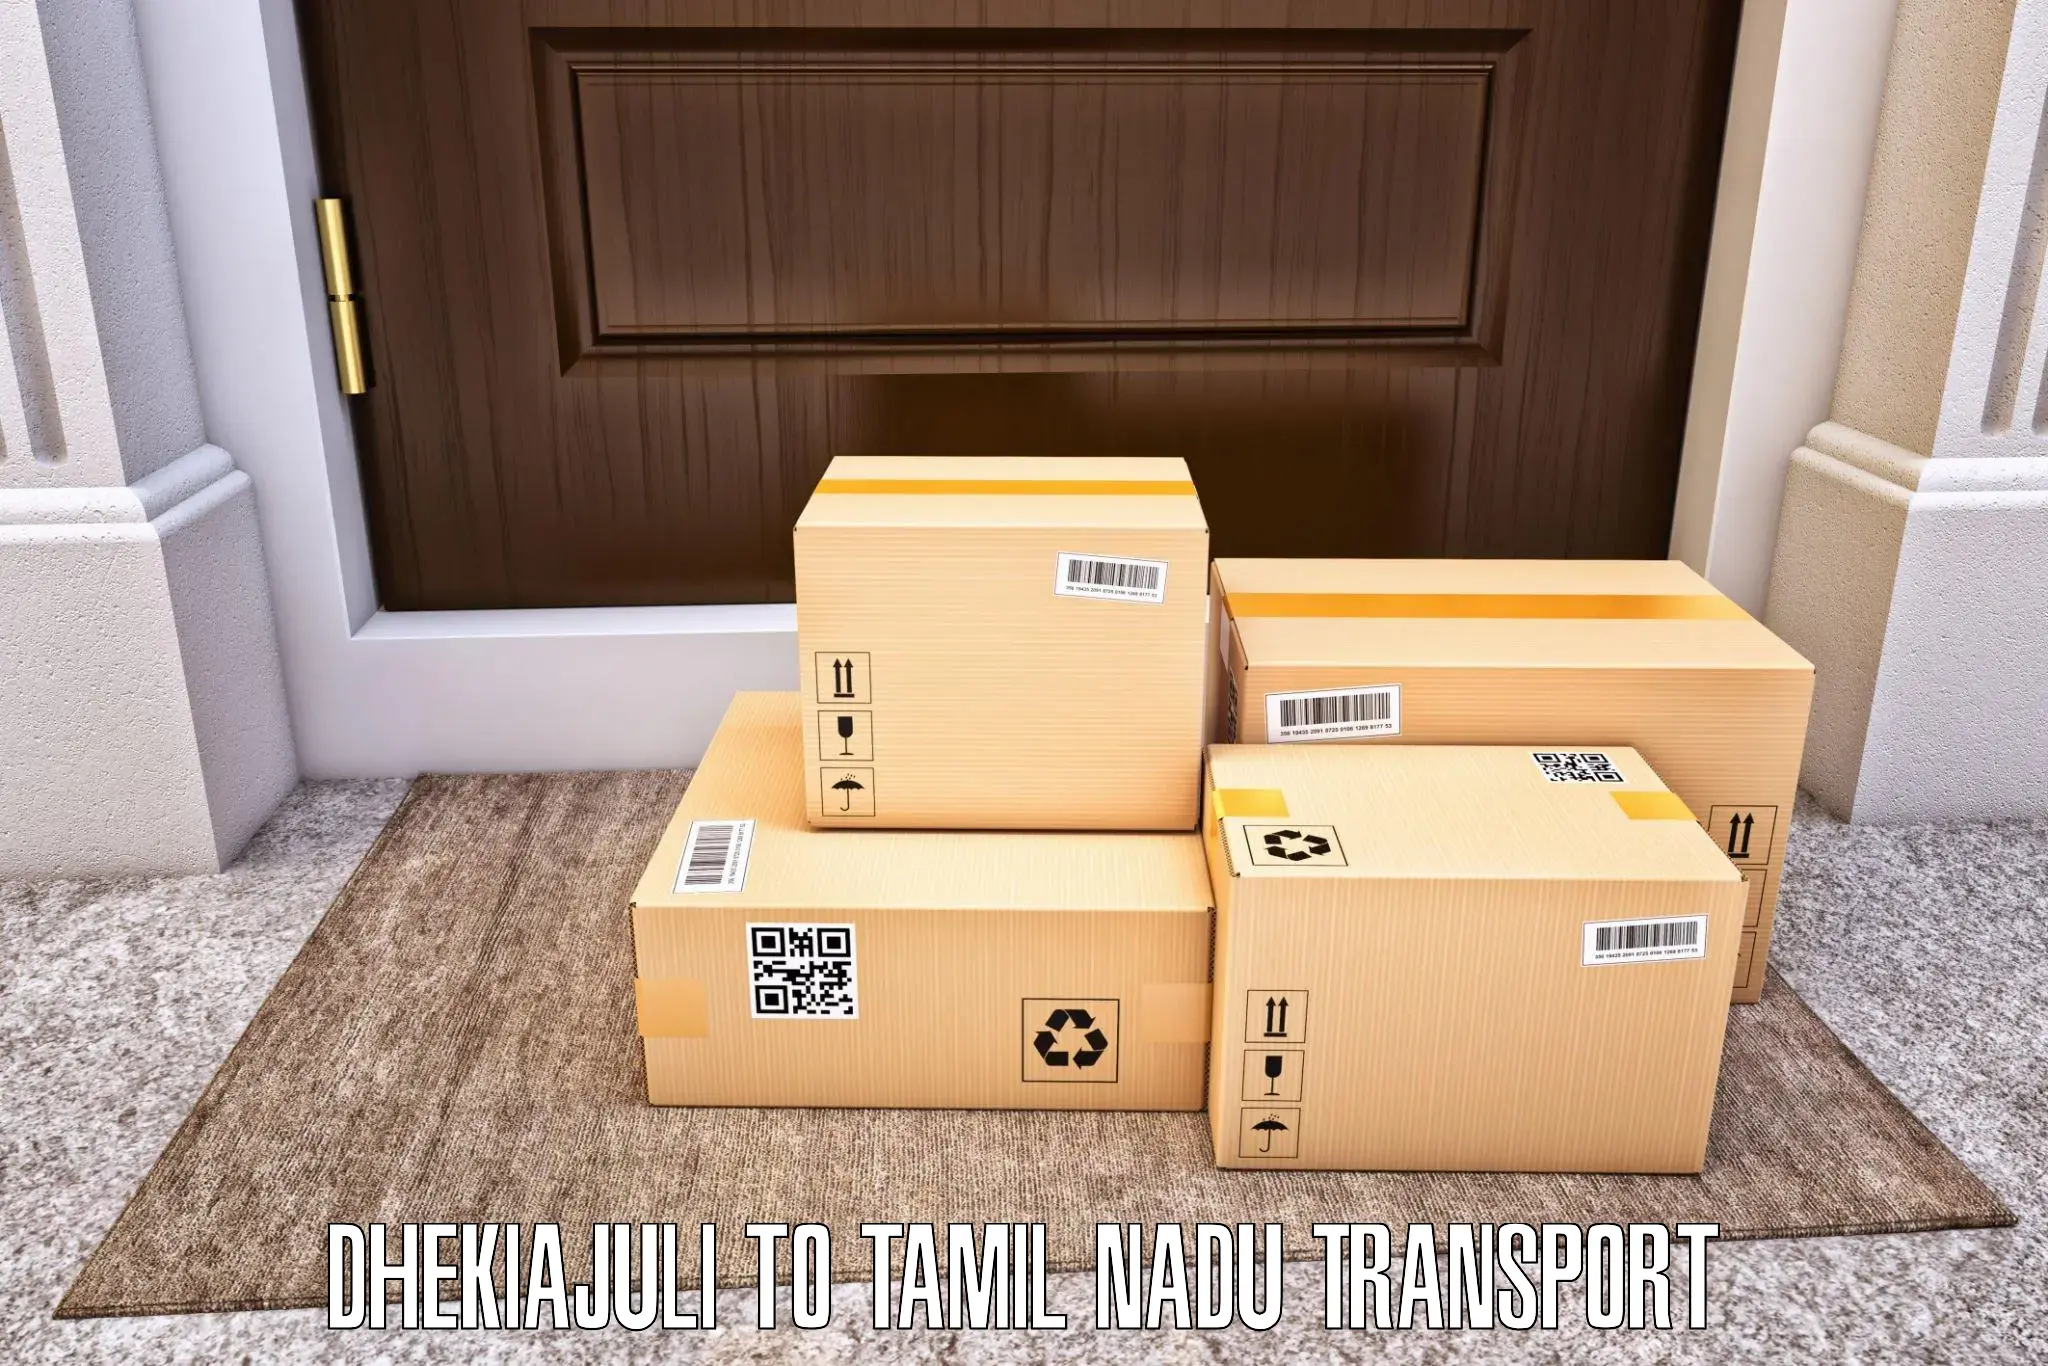 Transport shared services Dhekiajuli to Thiruthuraipoondi